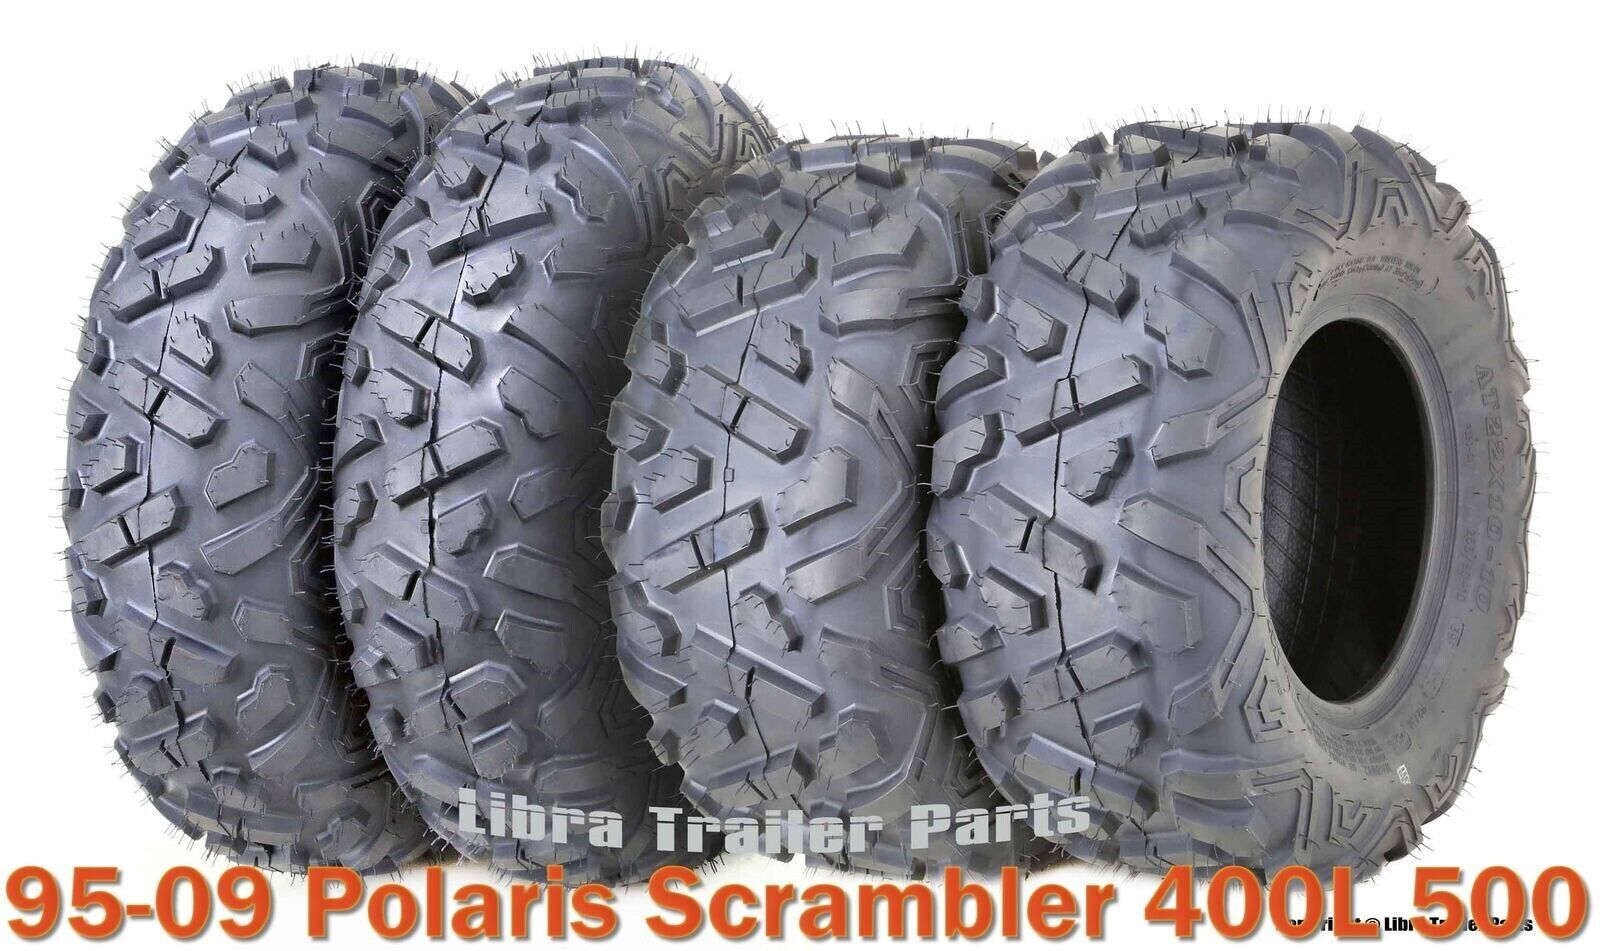 23x7-10 & 22x10-10 ATV Tire Set for 95-09 Polaris Scrambler 400L 500